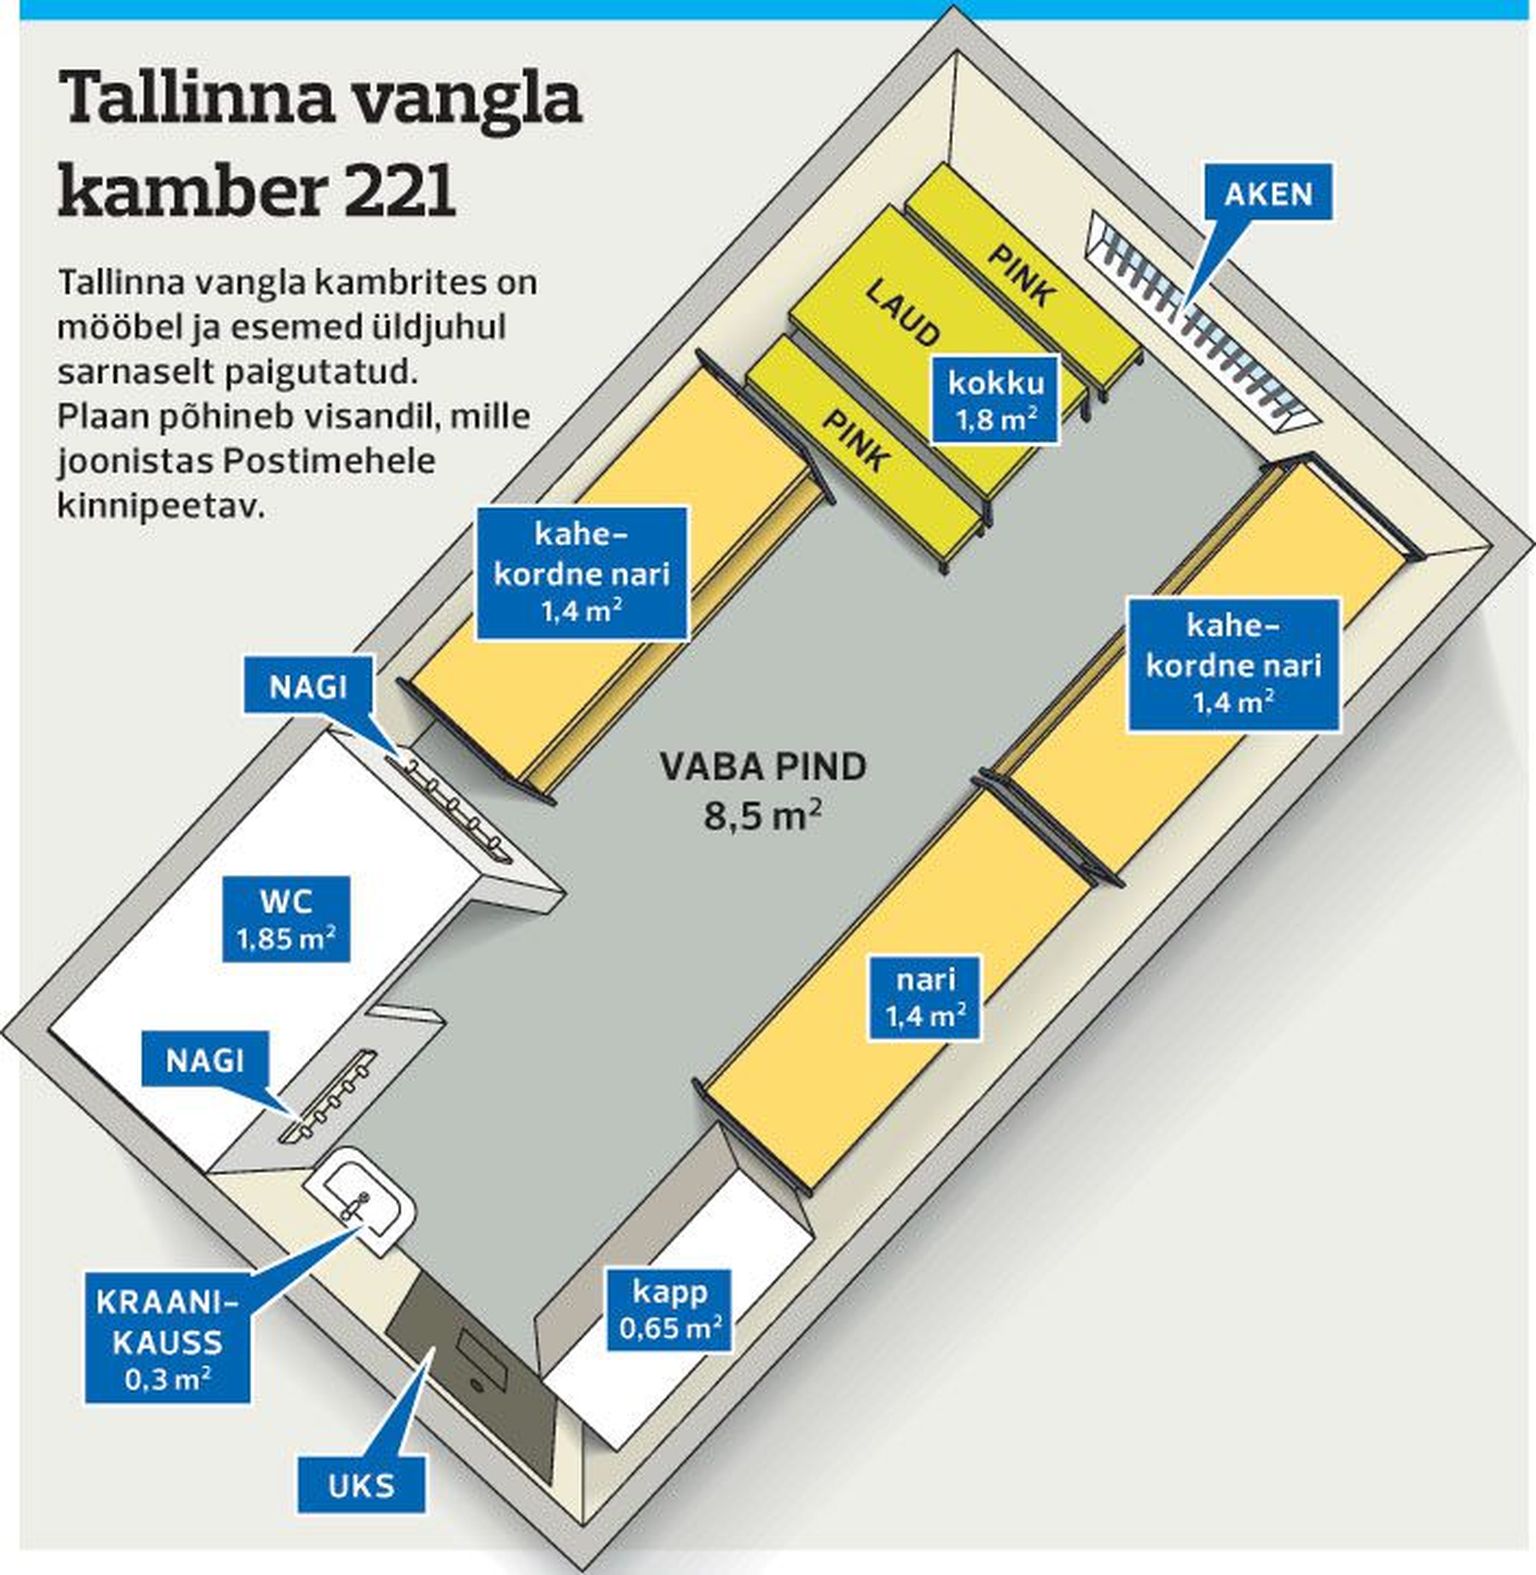 Tallinna vangla kamber 221.